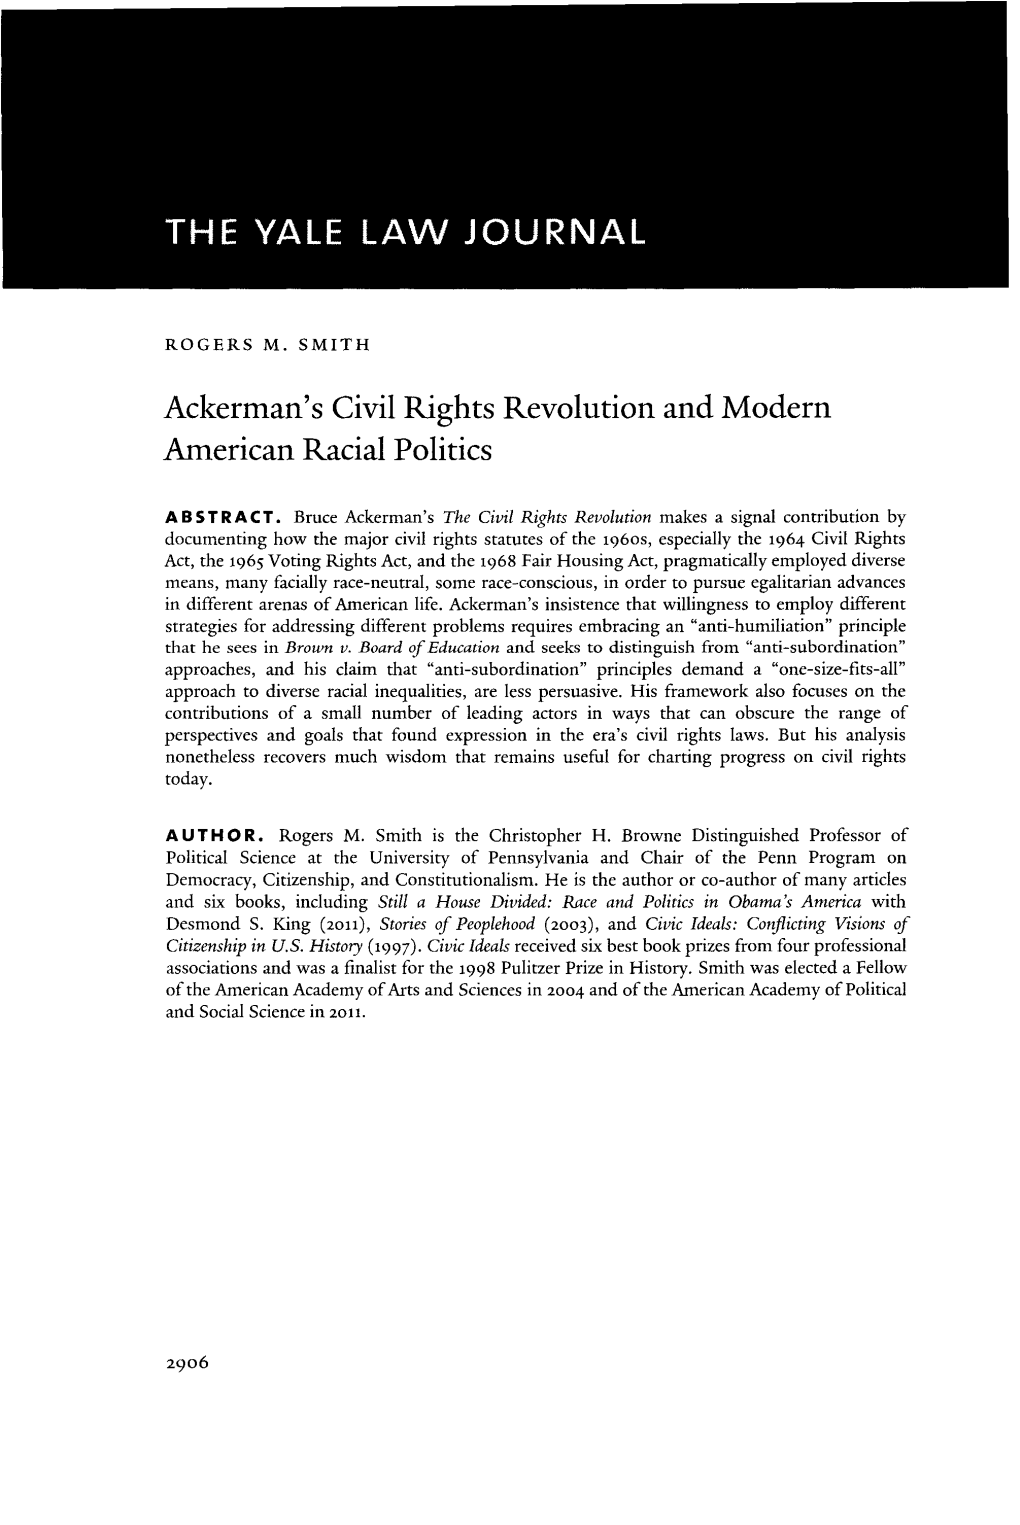 Ackerman's Civil Rights Revolution and Modern American Racial Politics